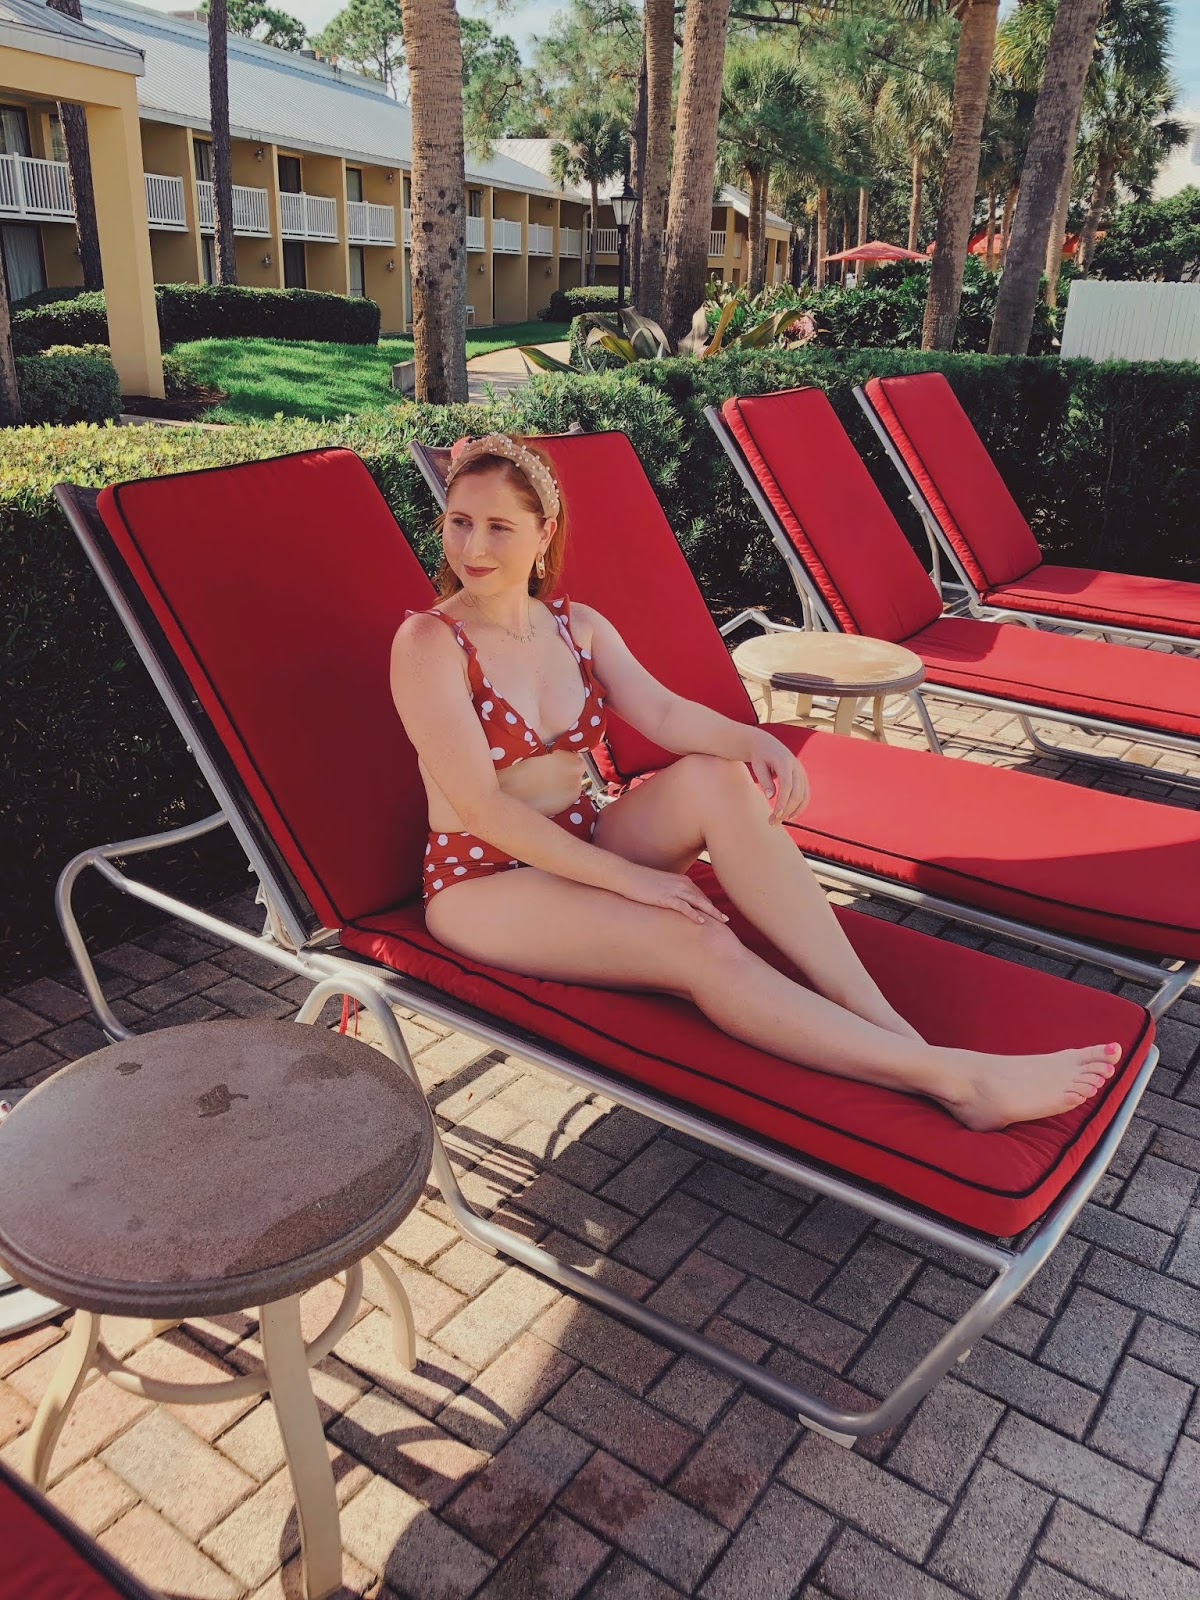 Hotel Review: Wyndham Orlando Resort International Drive. Xhilaration Women's Front Close Ruffle Shoulder Triangle Bikini Top - XhilarationTM Brown Polka Dot Xhilaration Women's High Waist Bikini Bottom - XhilarationTM Brown Polka Dot.